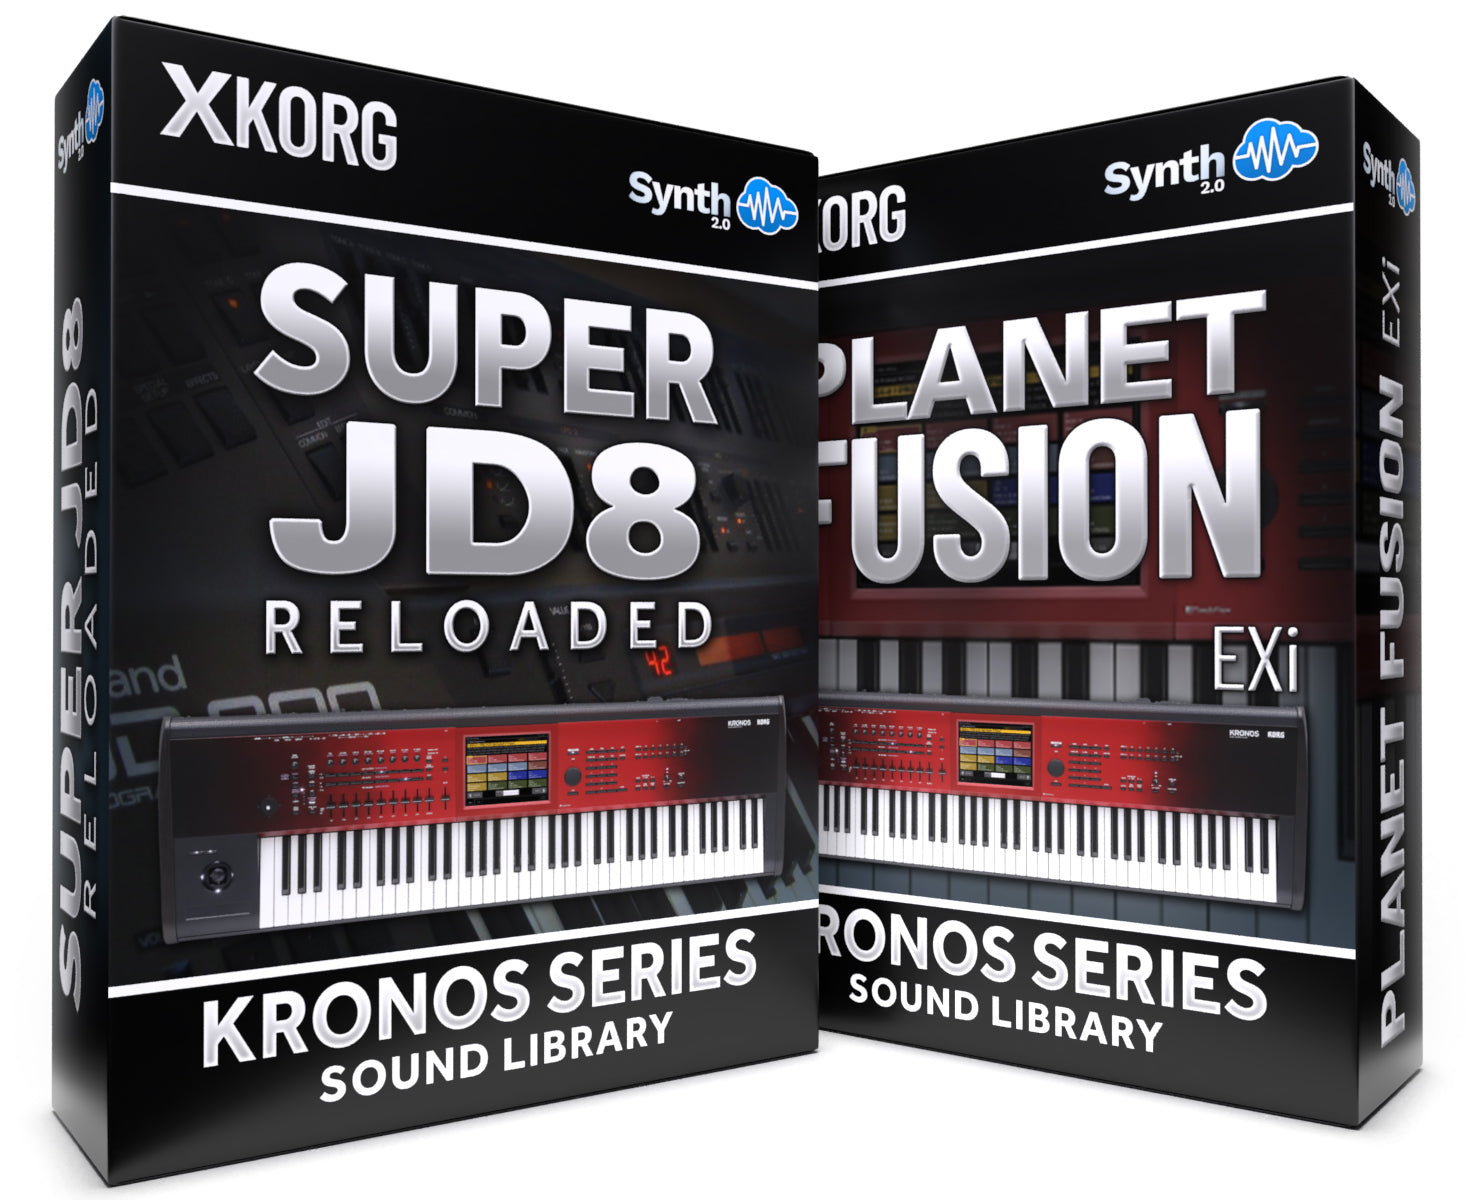 SSX137 - ( Bundle ) - Planet Fusion EXi + Super JD8 Reloaded - Korg Kronos Series